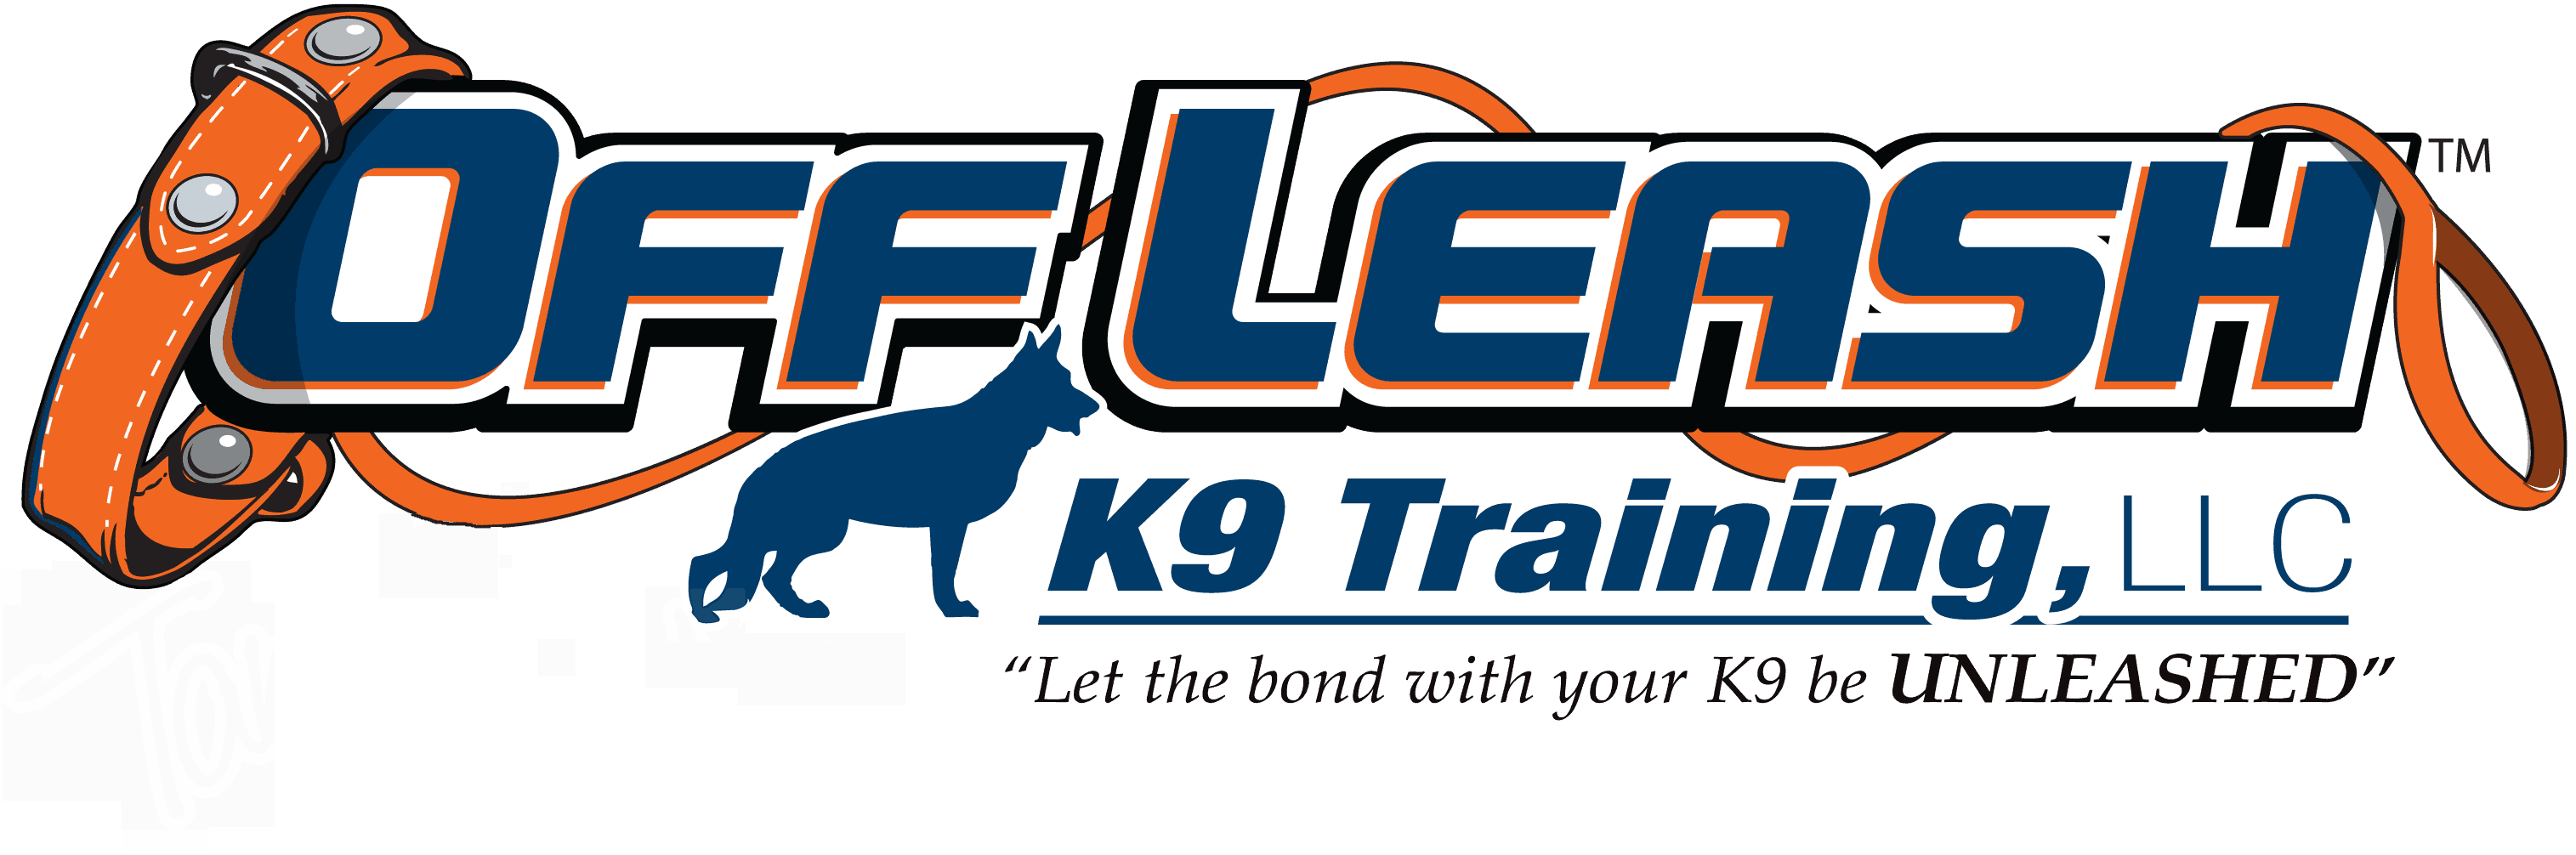 off leash k9 training